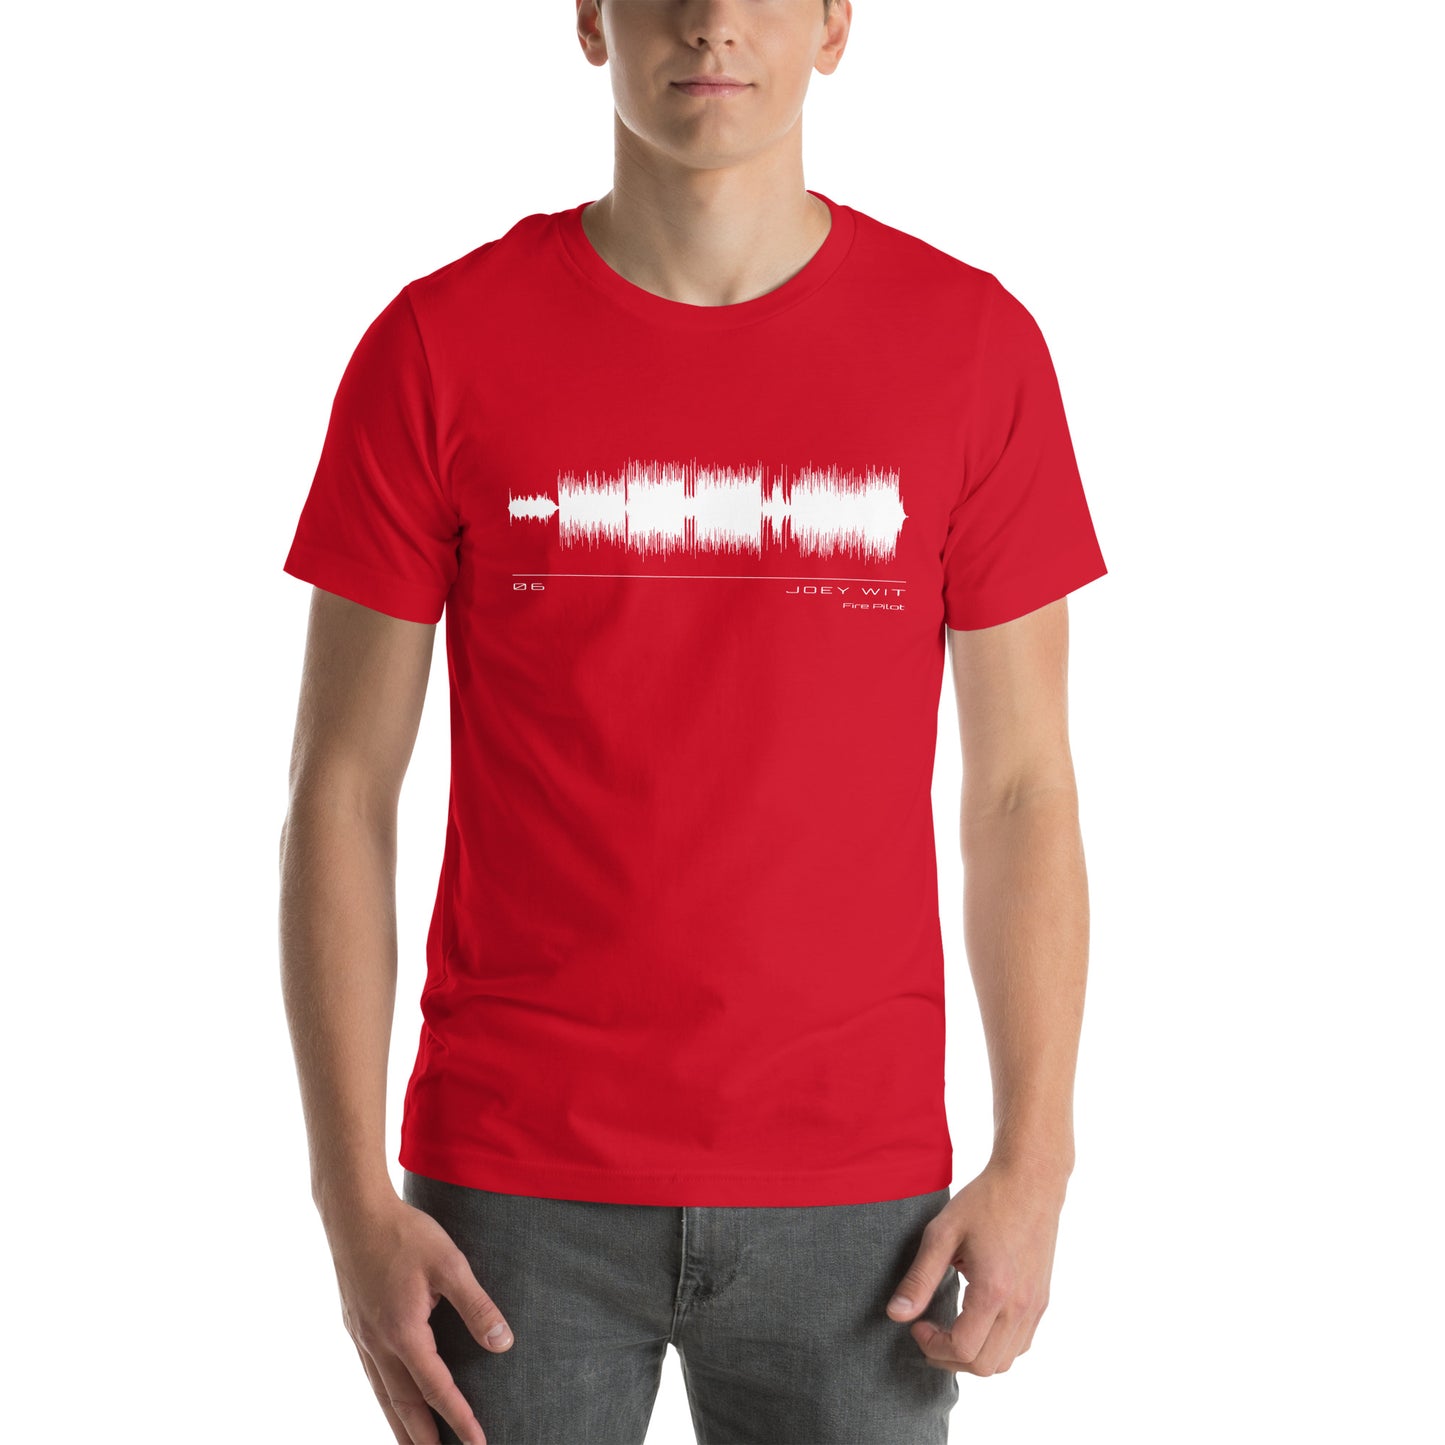 Joey Wit - Unisex T-shirt - Rose Gold #06 Fire Pilot (audio wave)